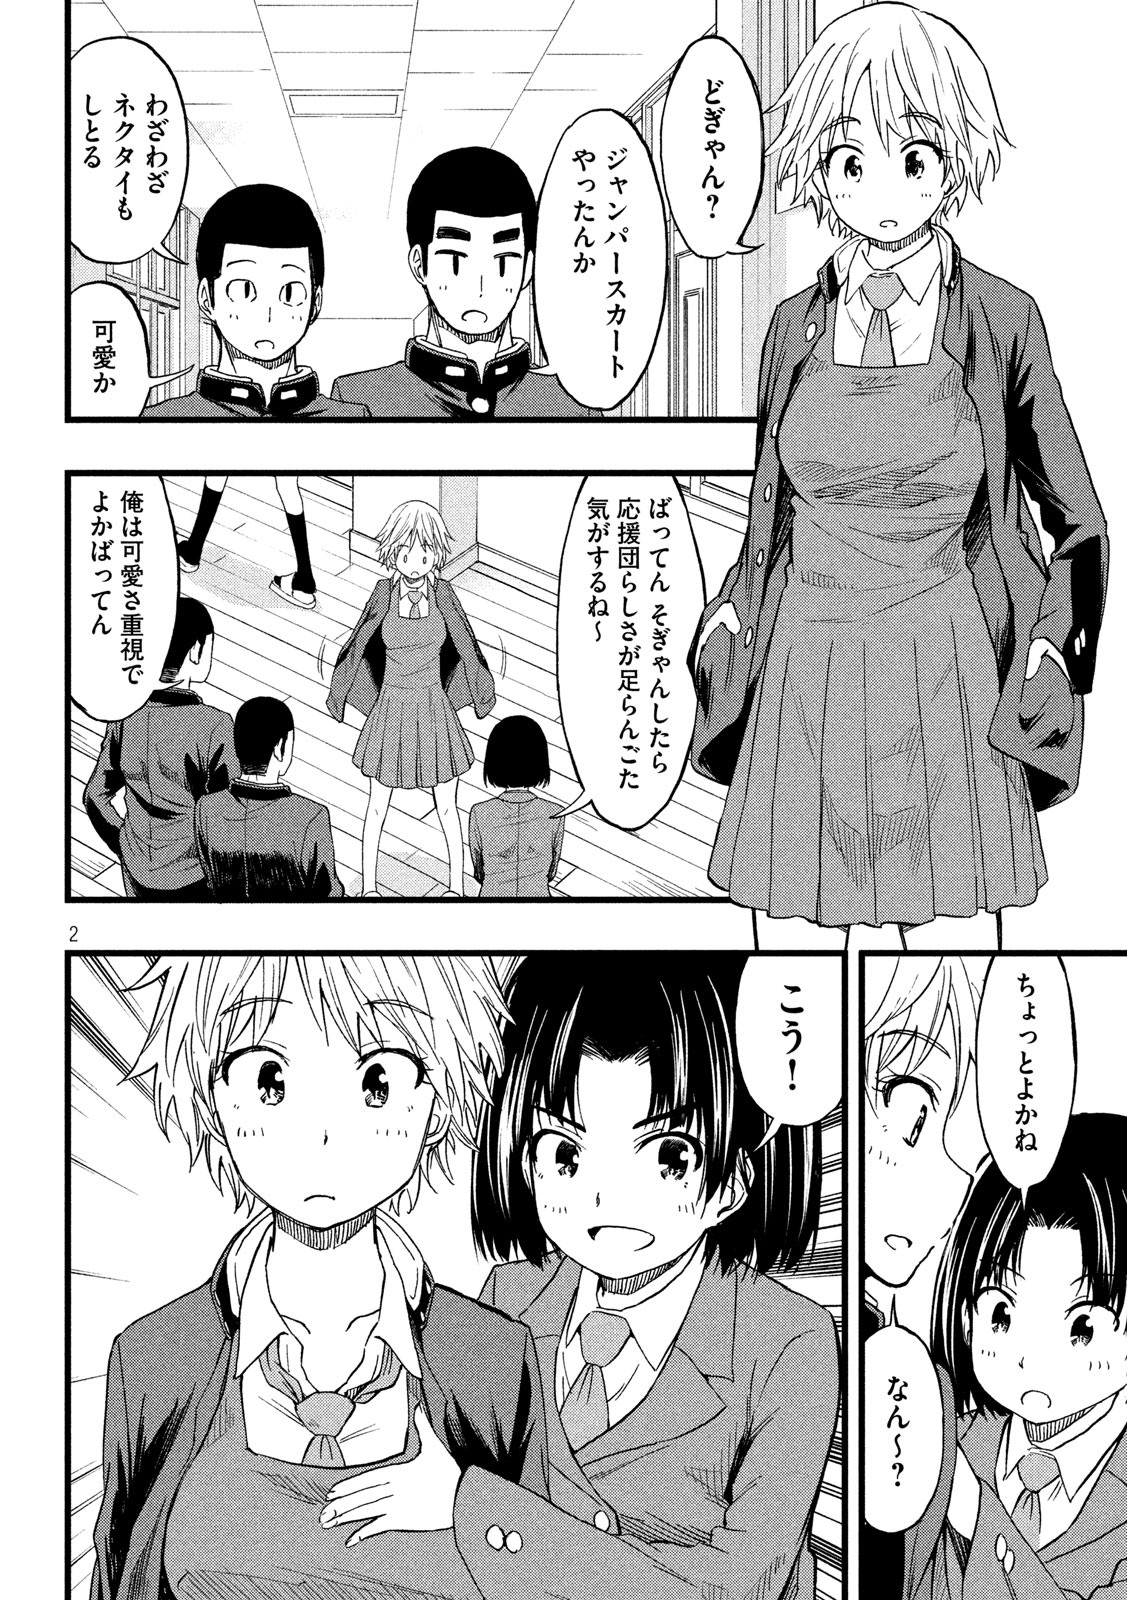 Koharu haru! - Chapter 53 - Page 2